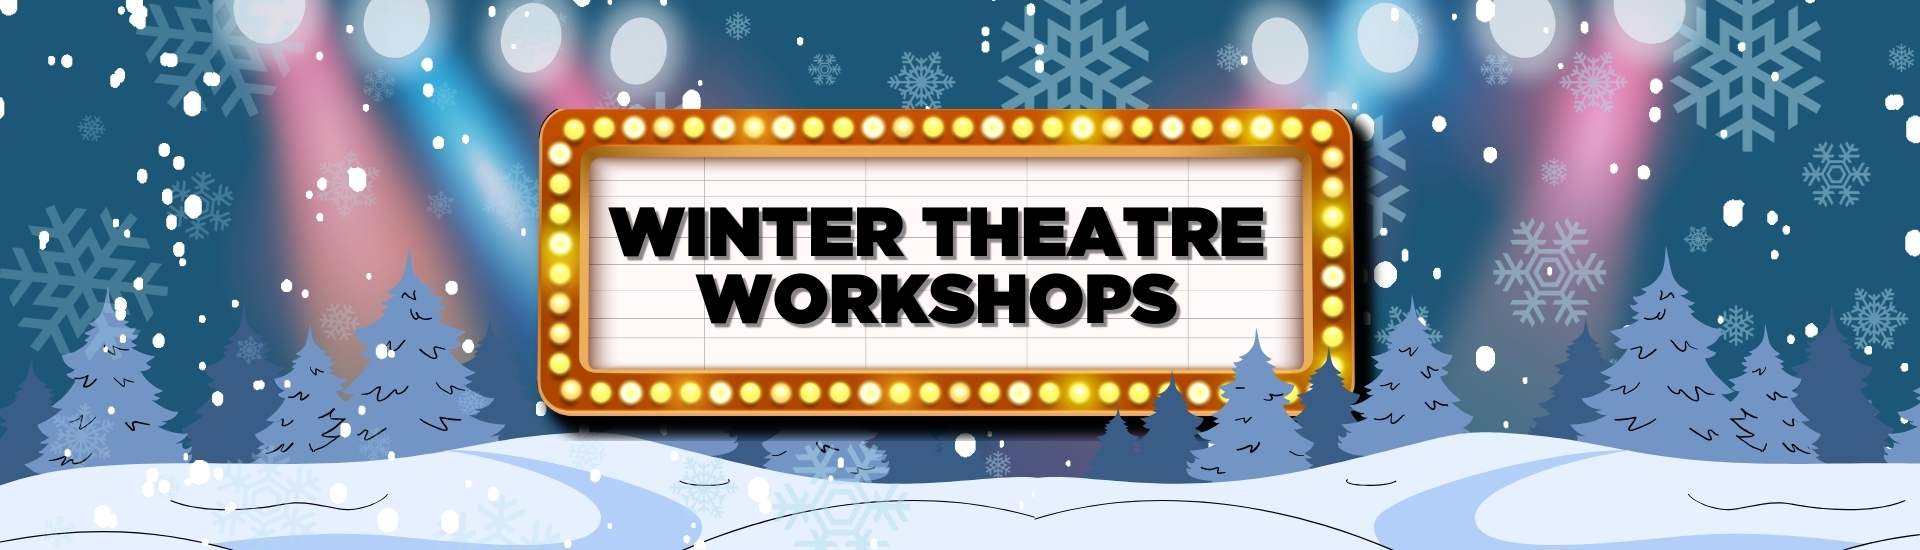 Winter Theatre Workshops